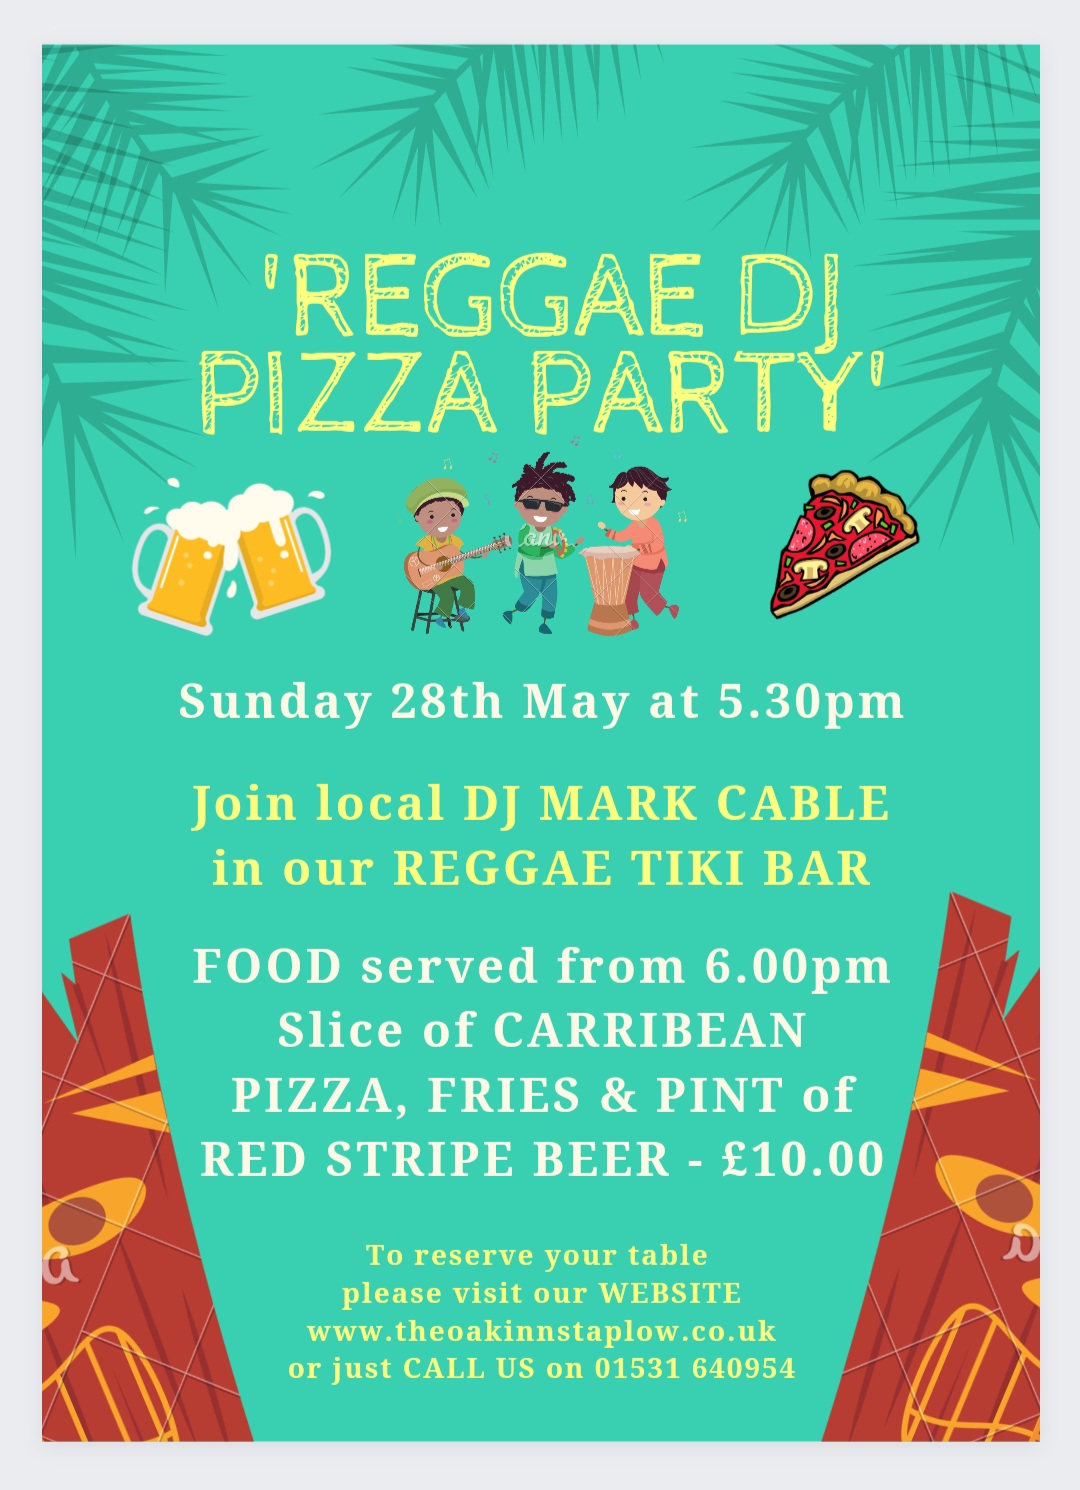 REGGAE DJ PIZZA PARTY on Sunday 28th May at 5.30pm - LIVE DJ